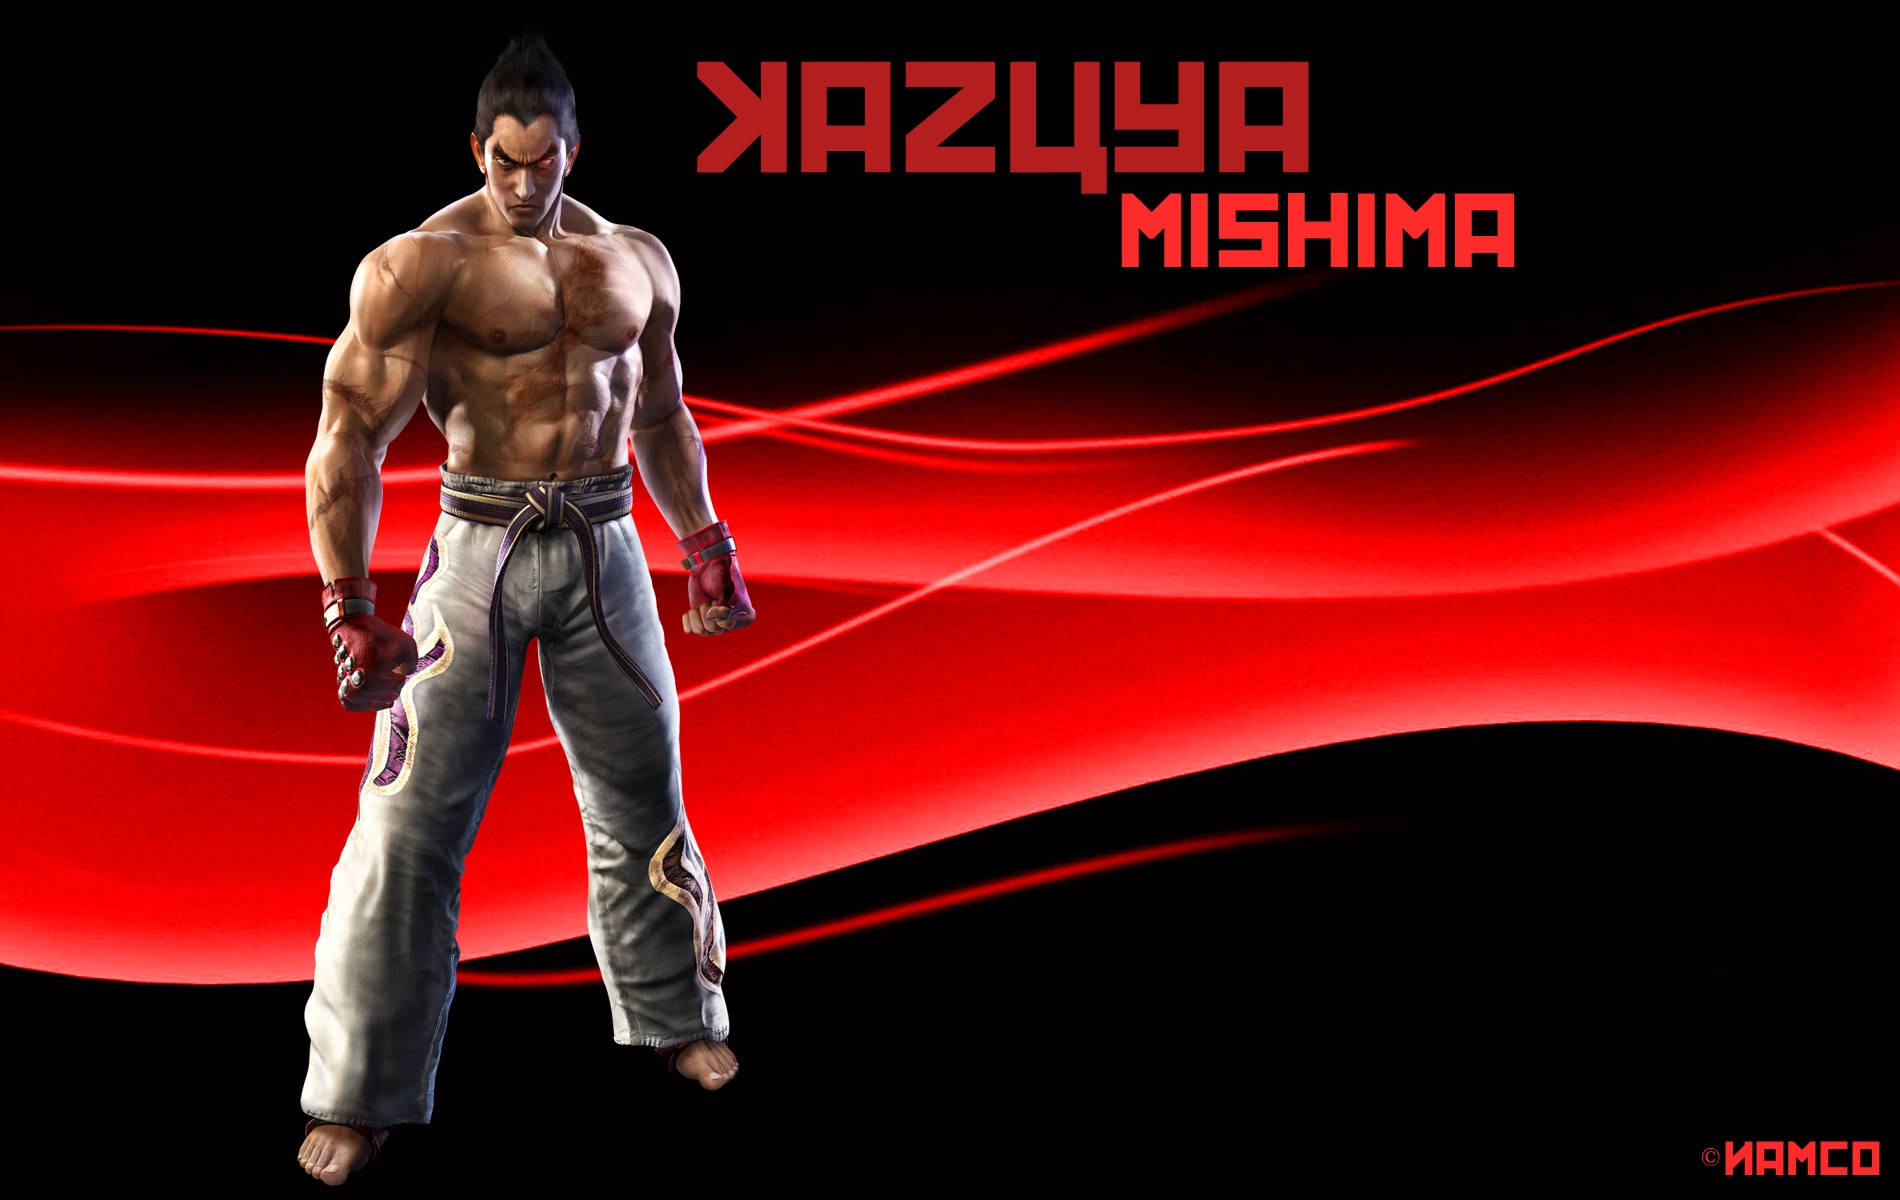 Kazuya Mishima In Digital Red Wave Background